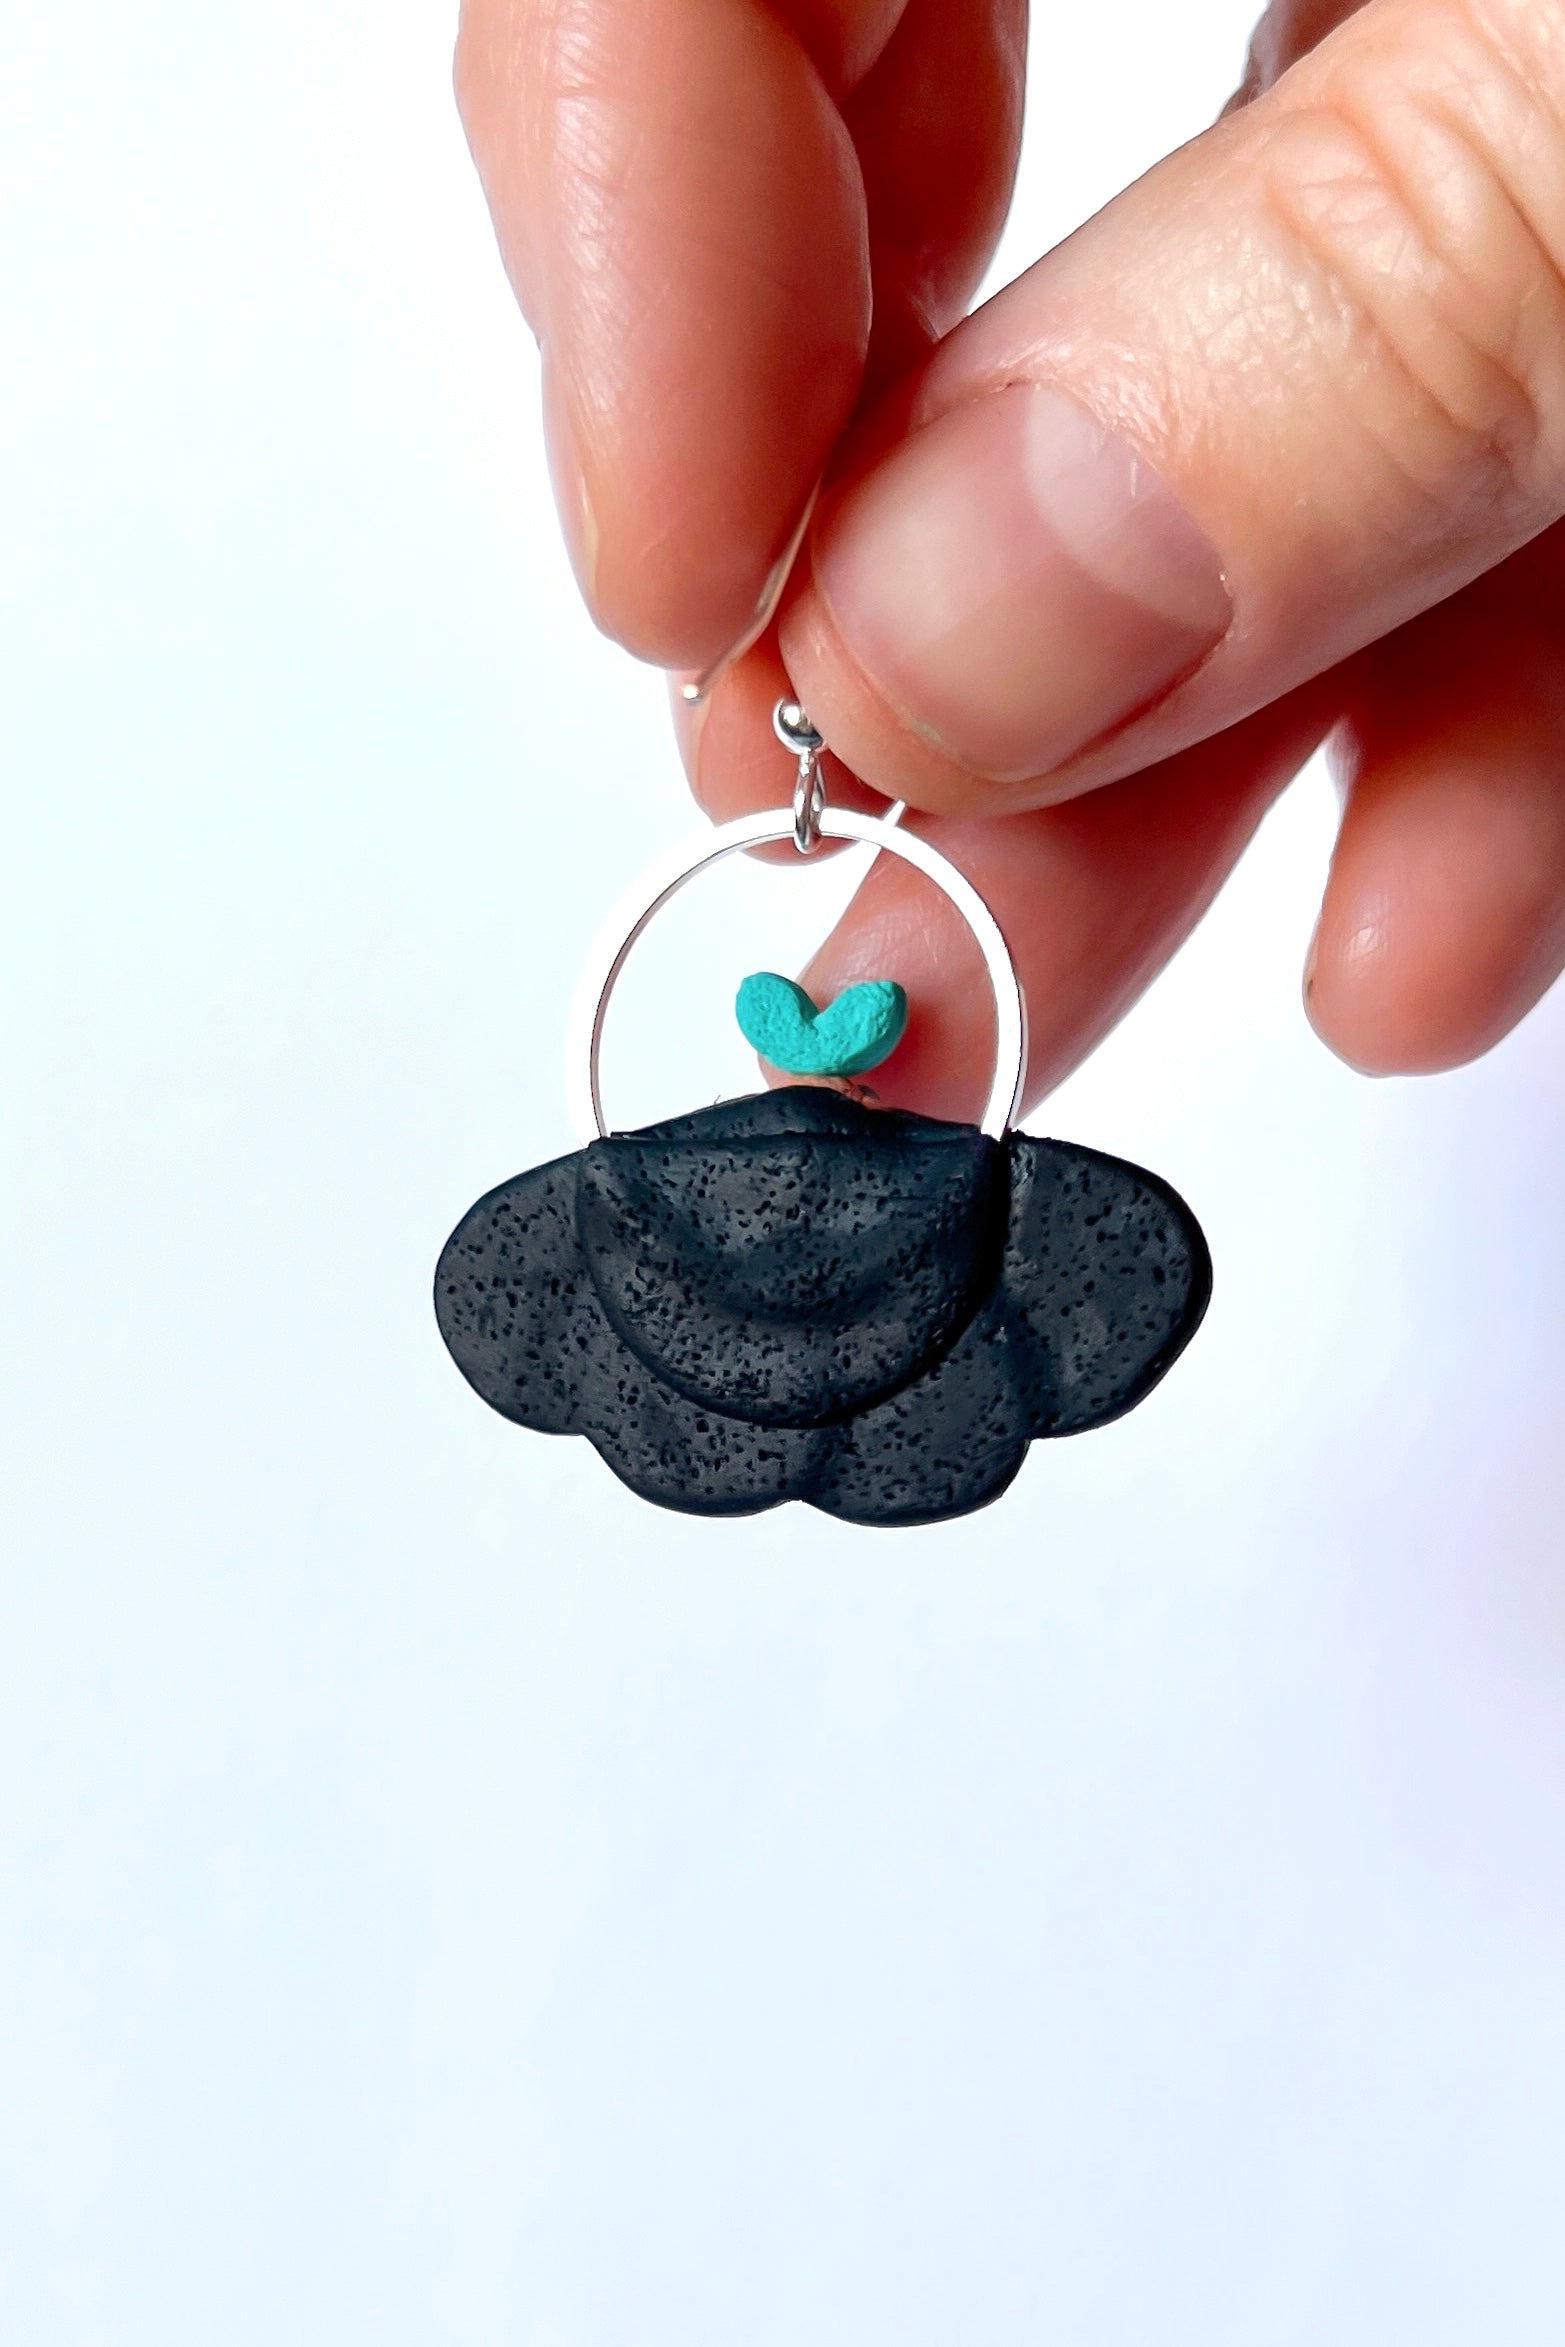 Mini Moth Earrings - BlueBassoon Handmade